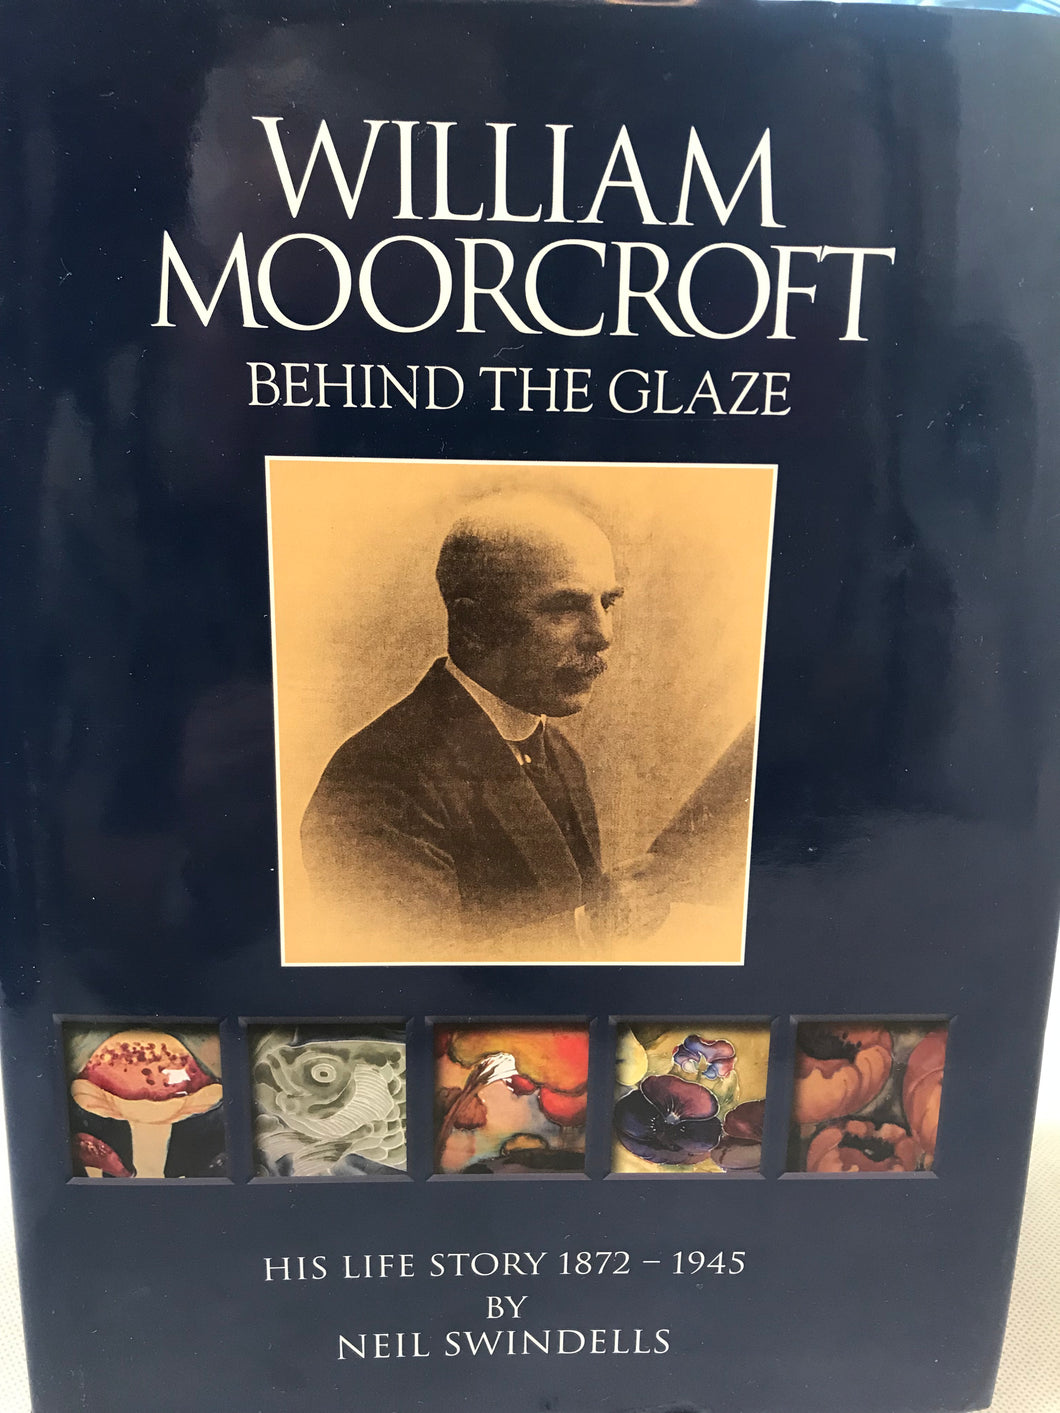 Moorcroft